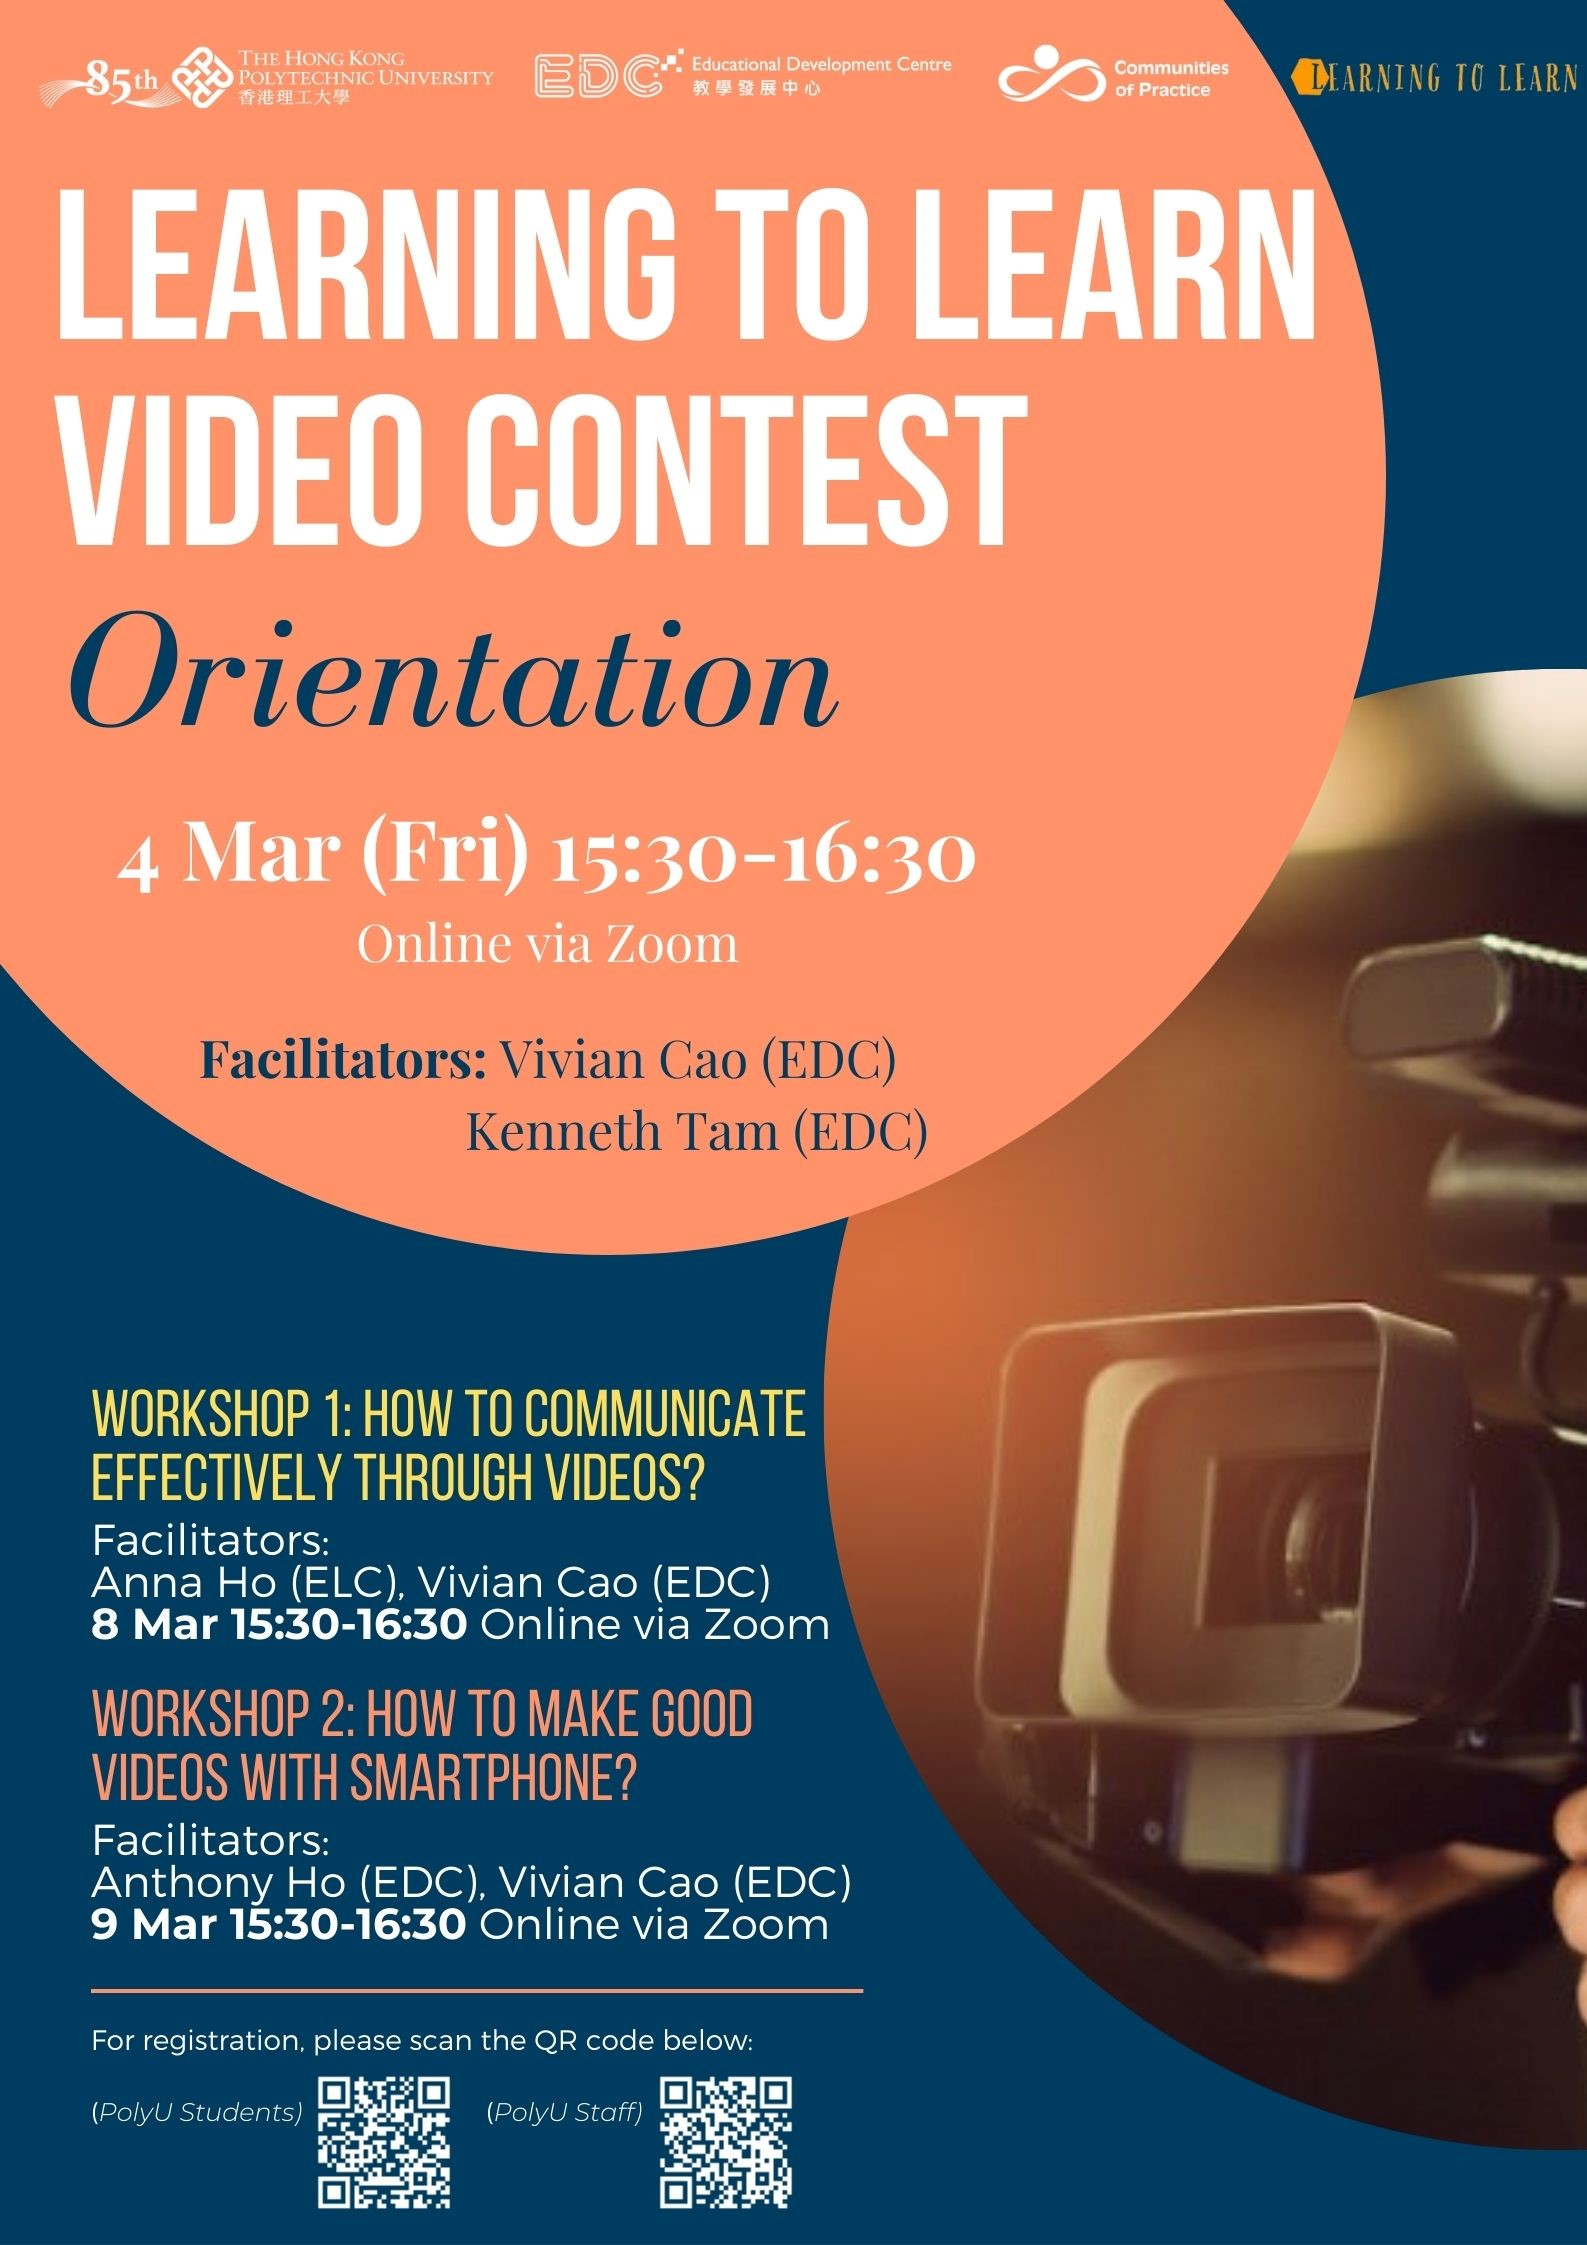 L2L video contest workshops